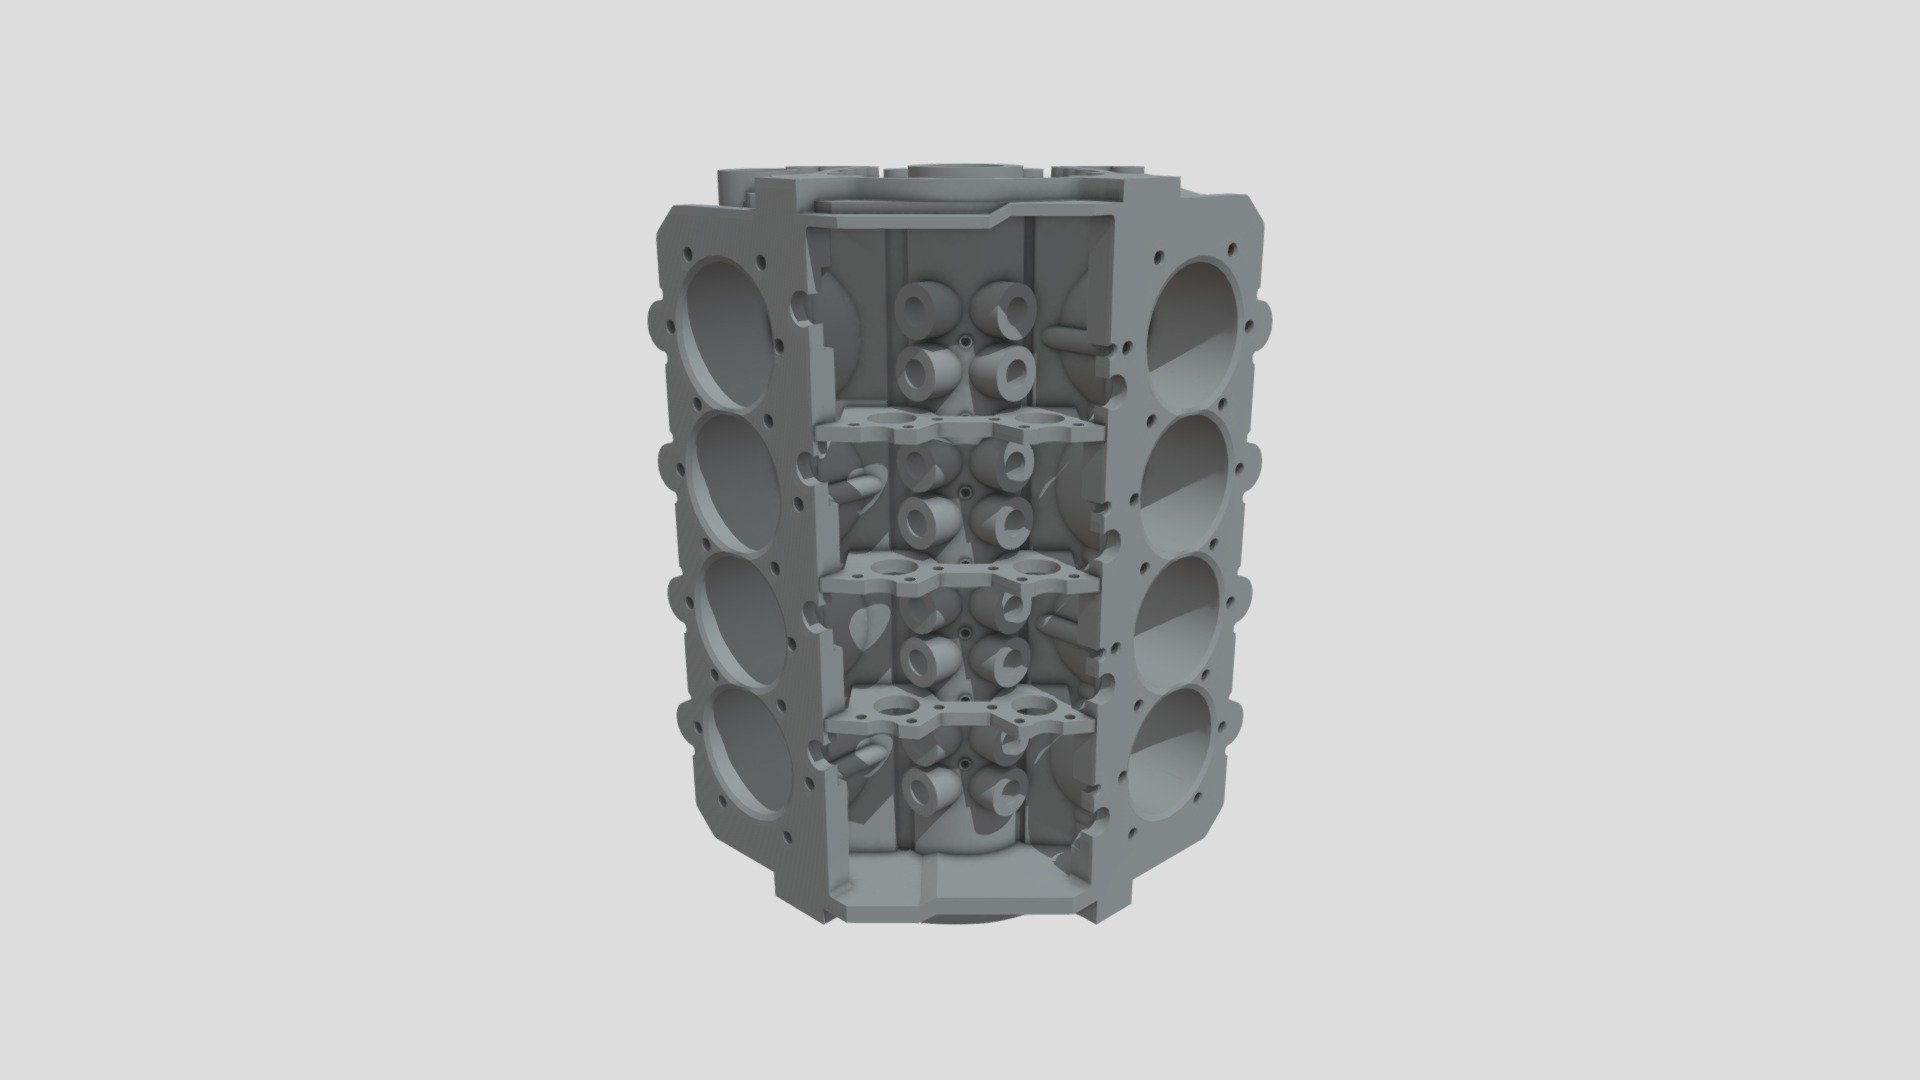 v8 engine block dimensions